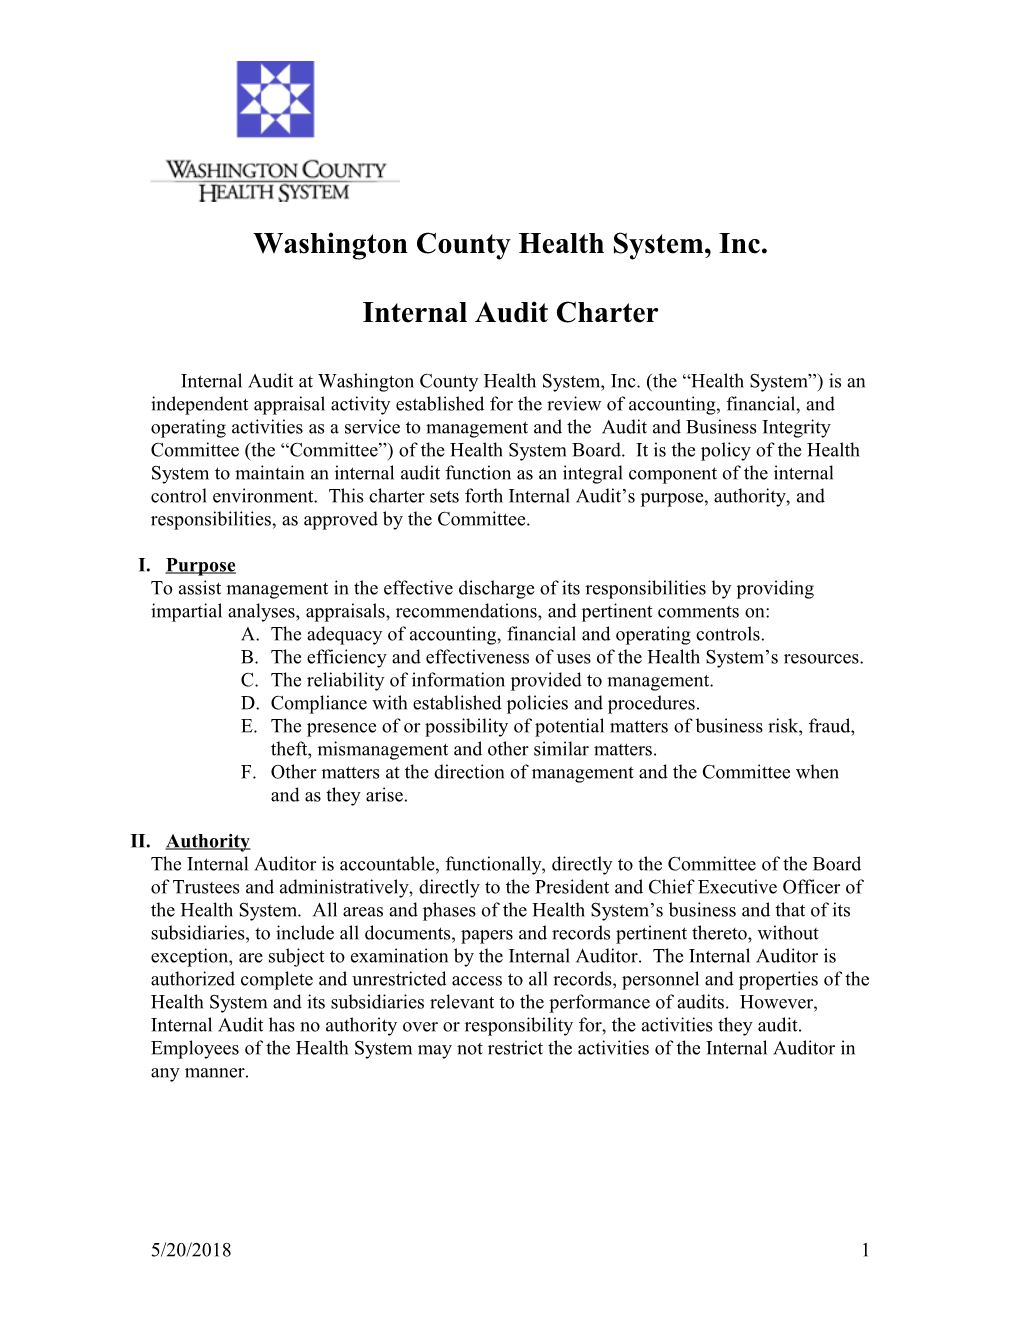 Washington County Health System, Inc